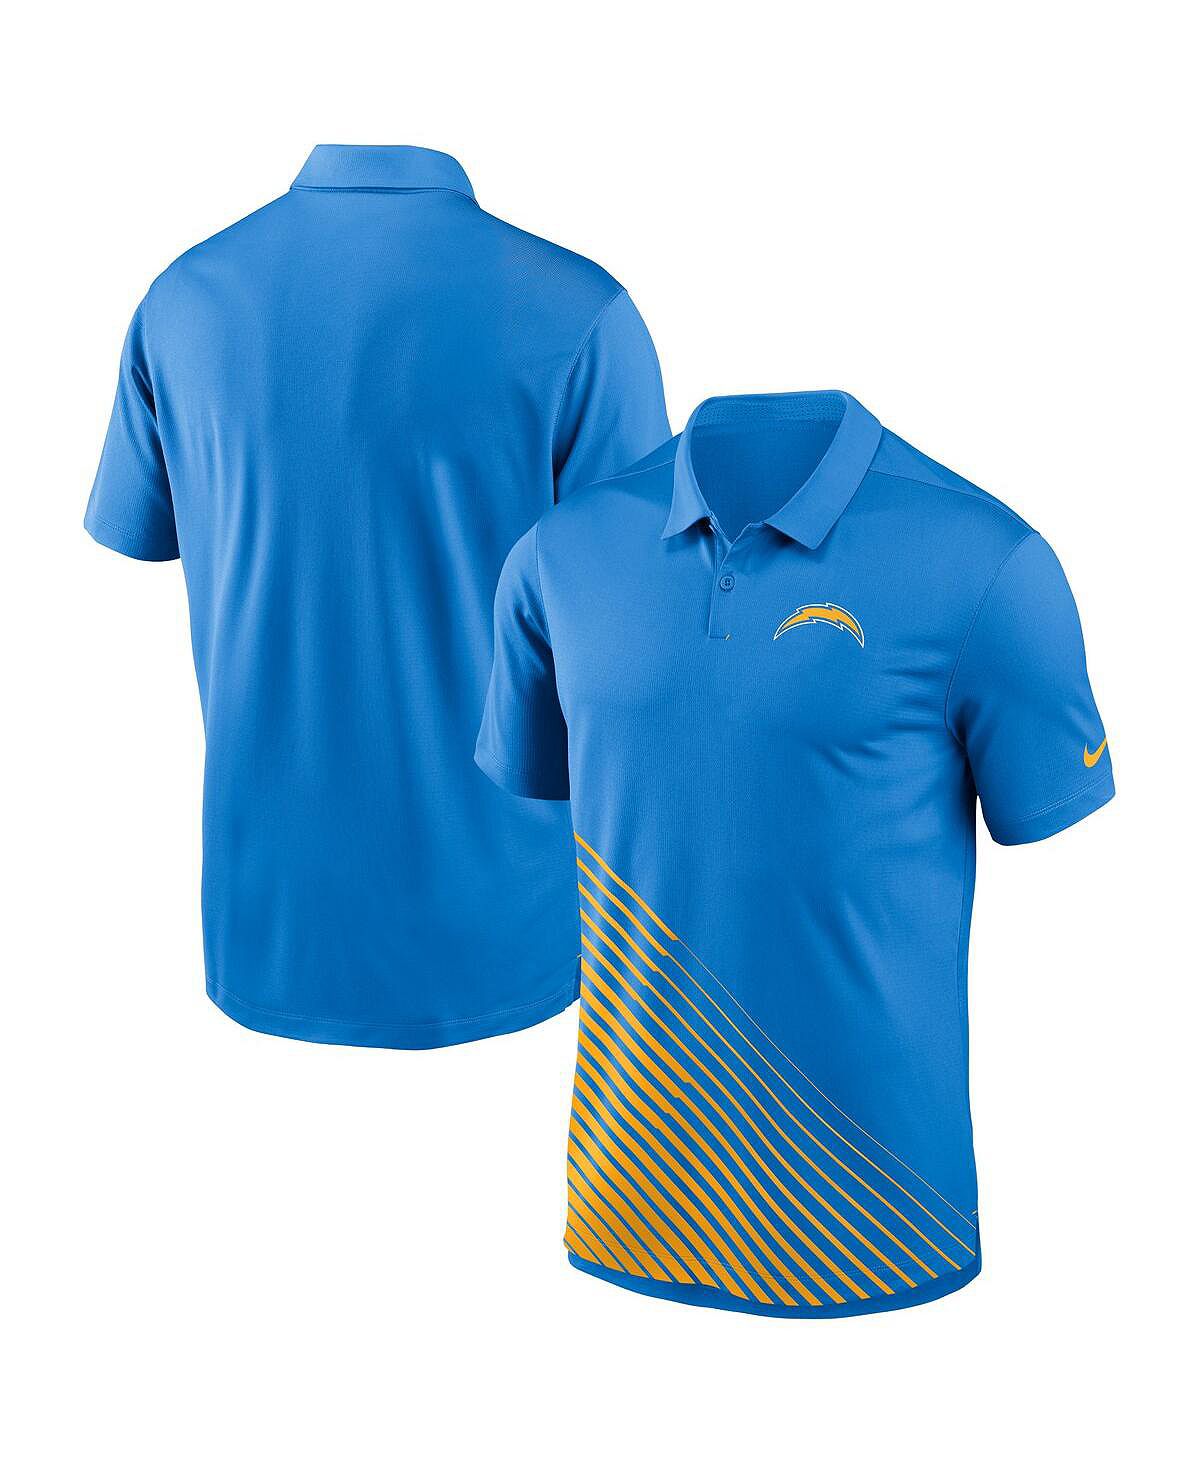 Мужская рубашка-поло синего цвета Los Angeles Chargers Vapor Performance Nike